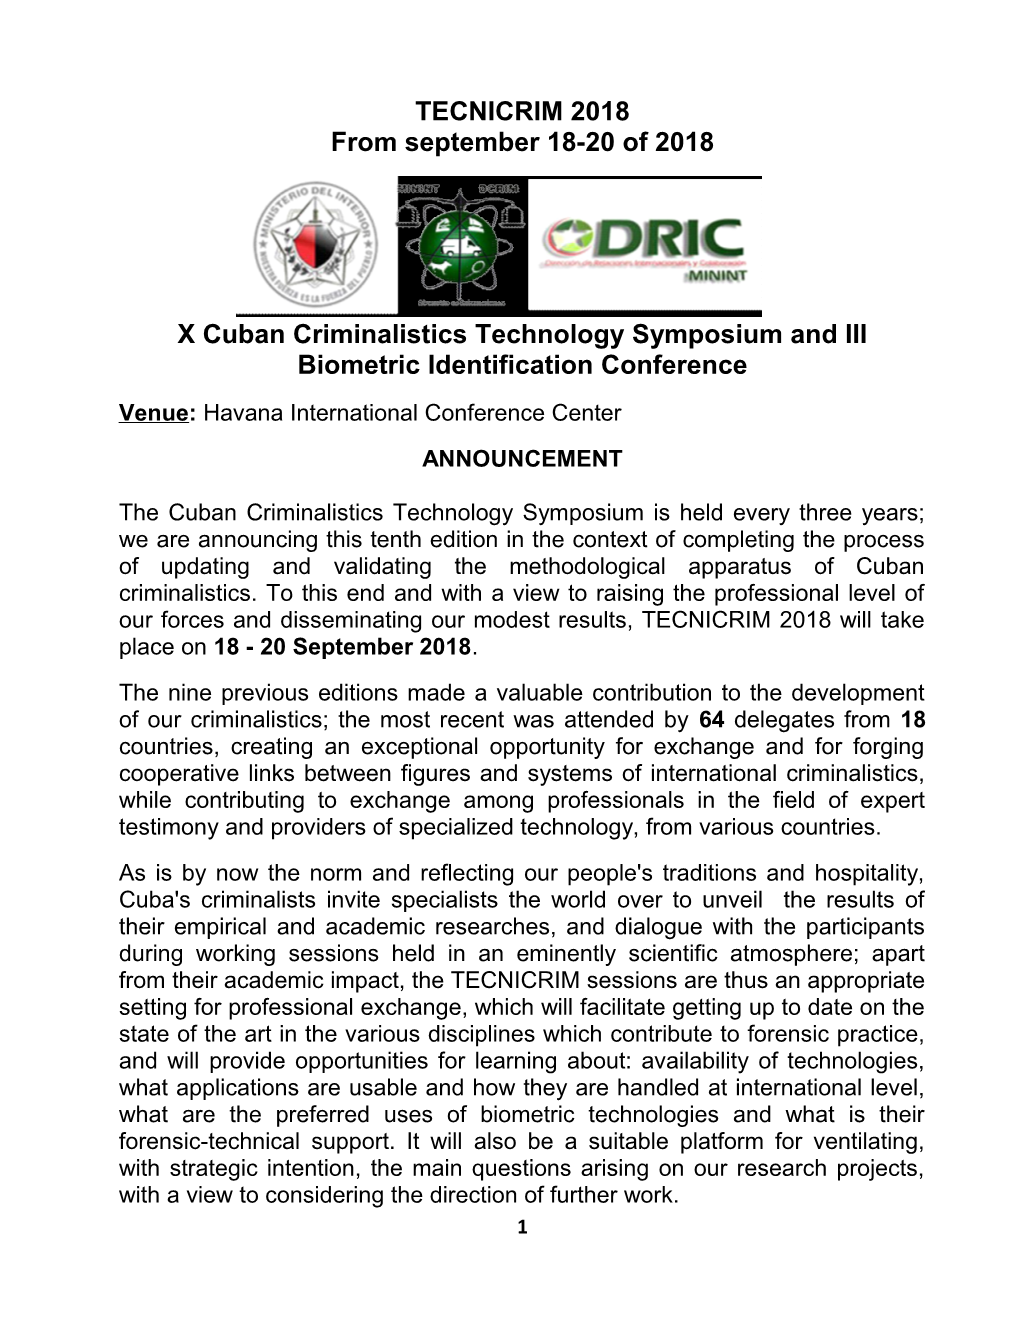 X Cuban Criminalistics Technology Symposium and Iiibiometric Identification Conference